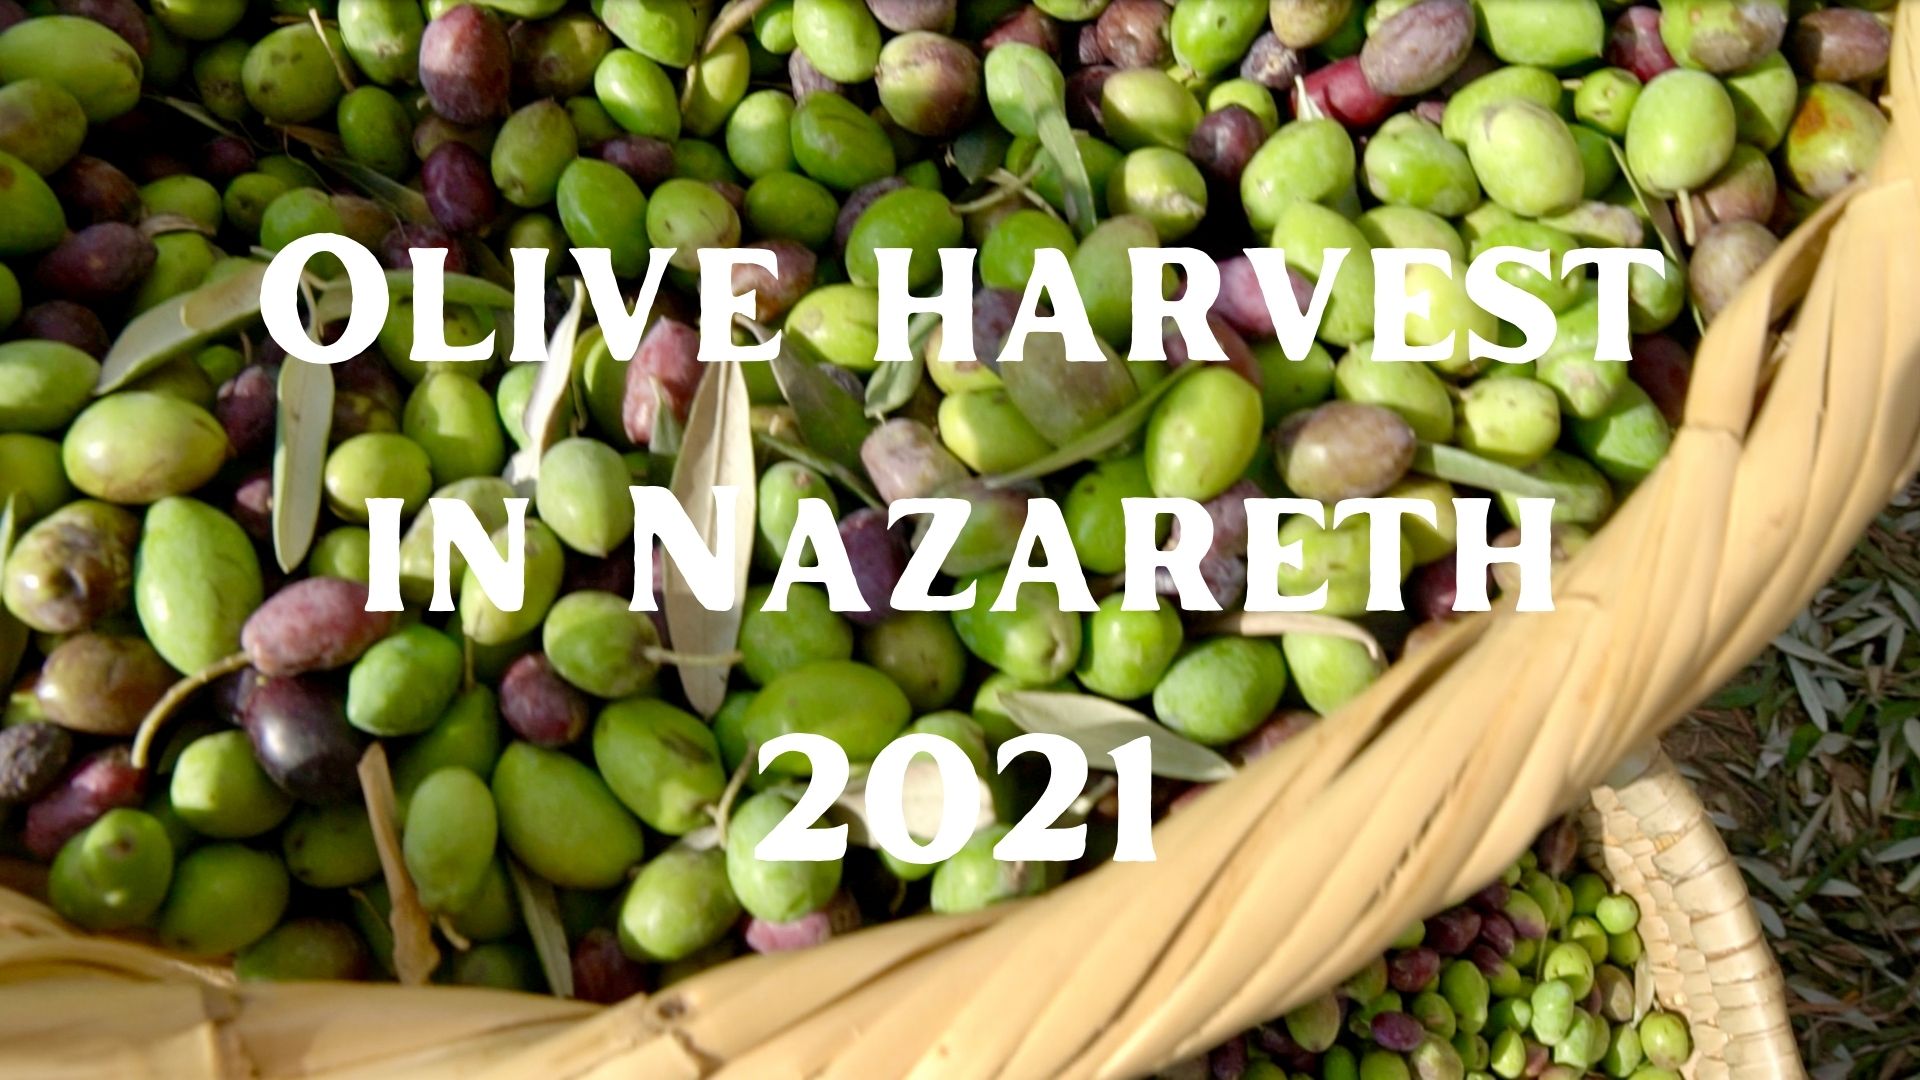 Enjoying the Olive Harvest Season in Nazareth